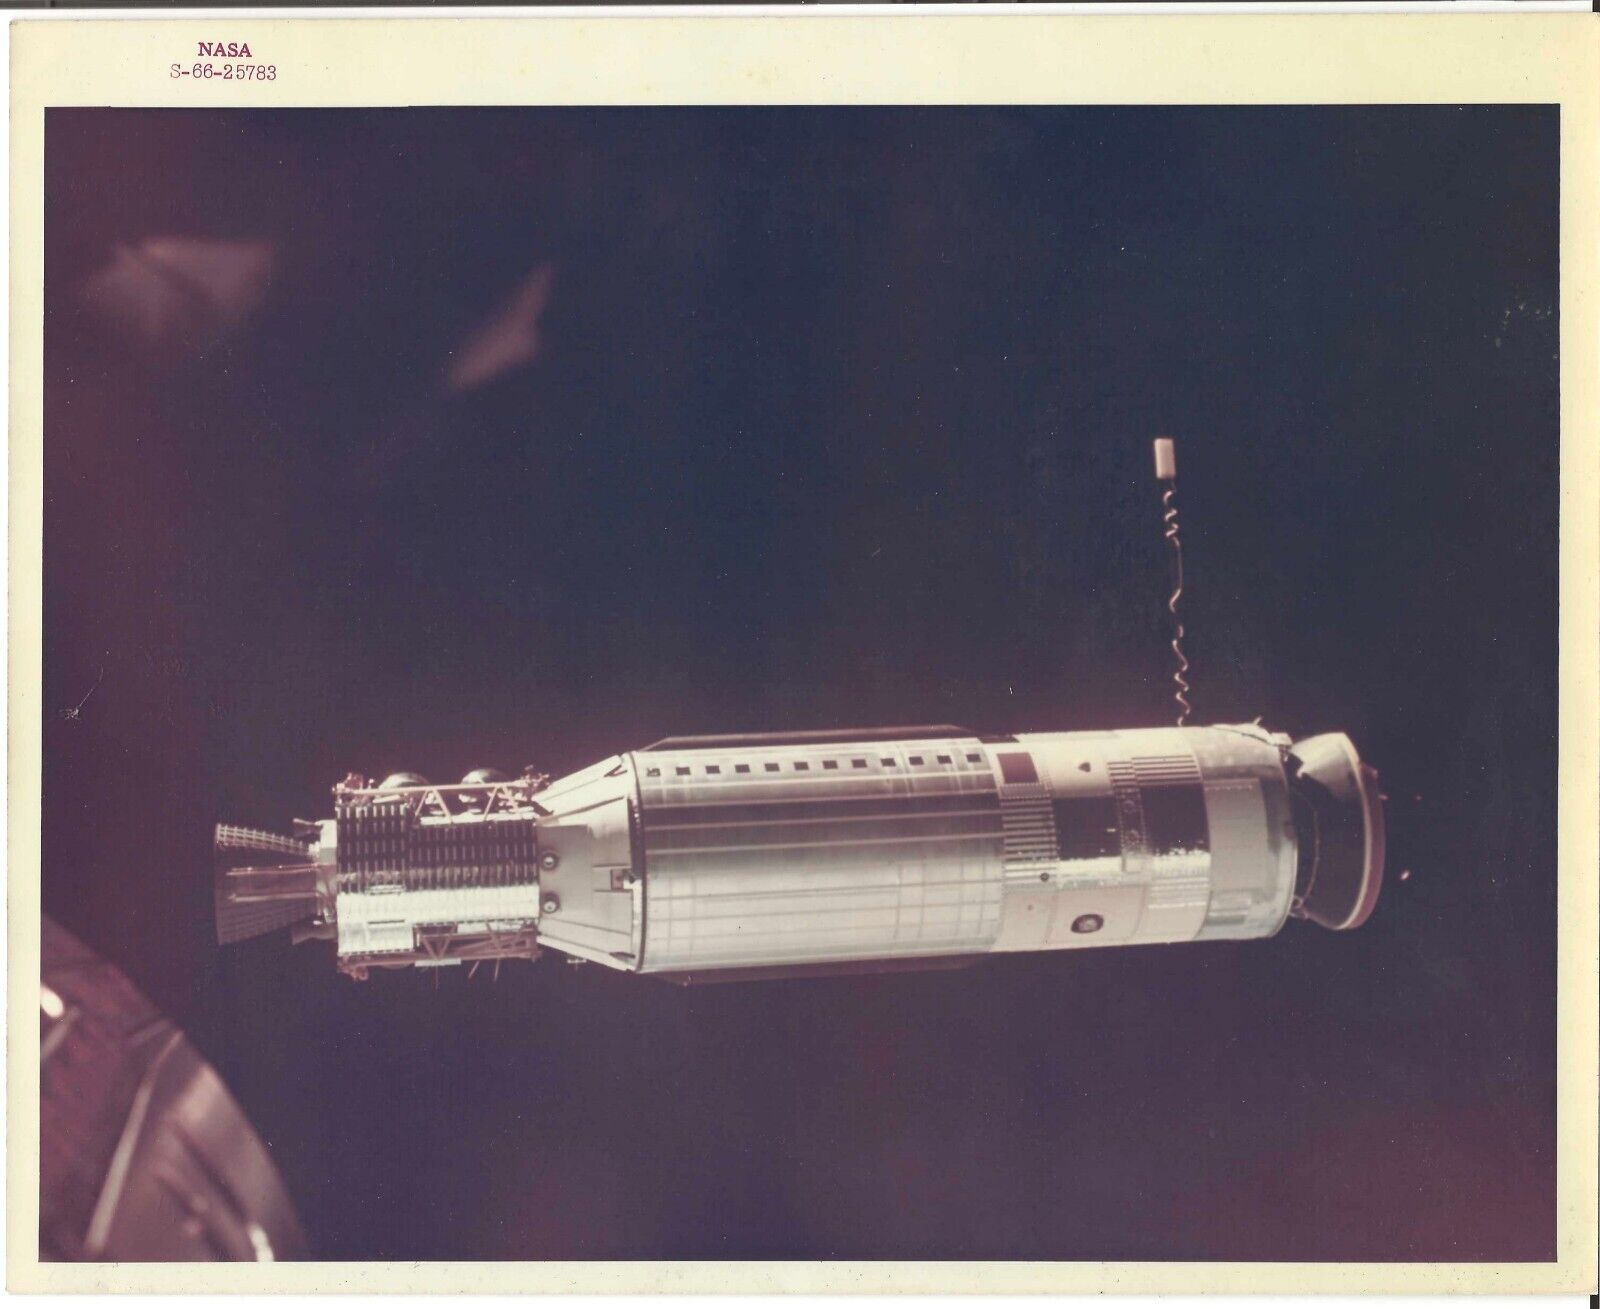 NASA Photo Gemini VIII Neil Armstrong Scott - Red # S-66-25783- A Kodak Paper